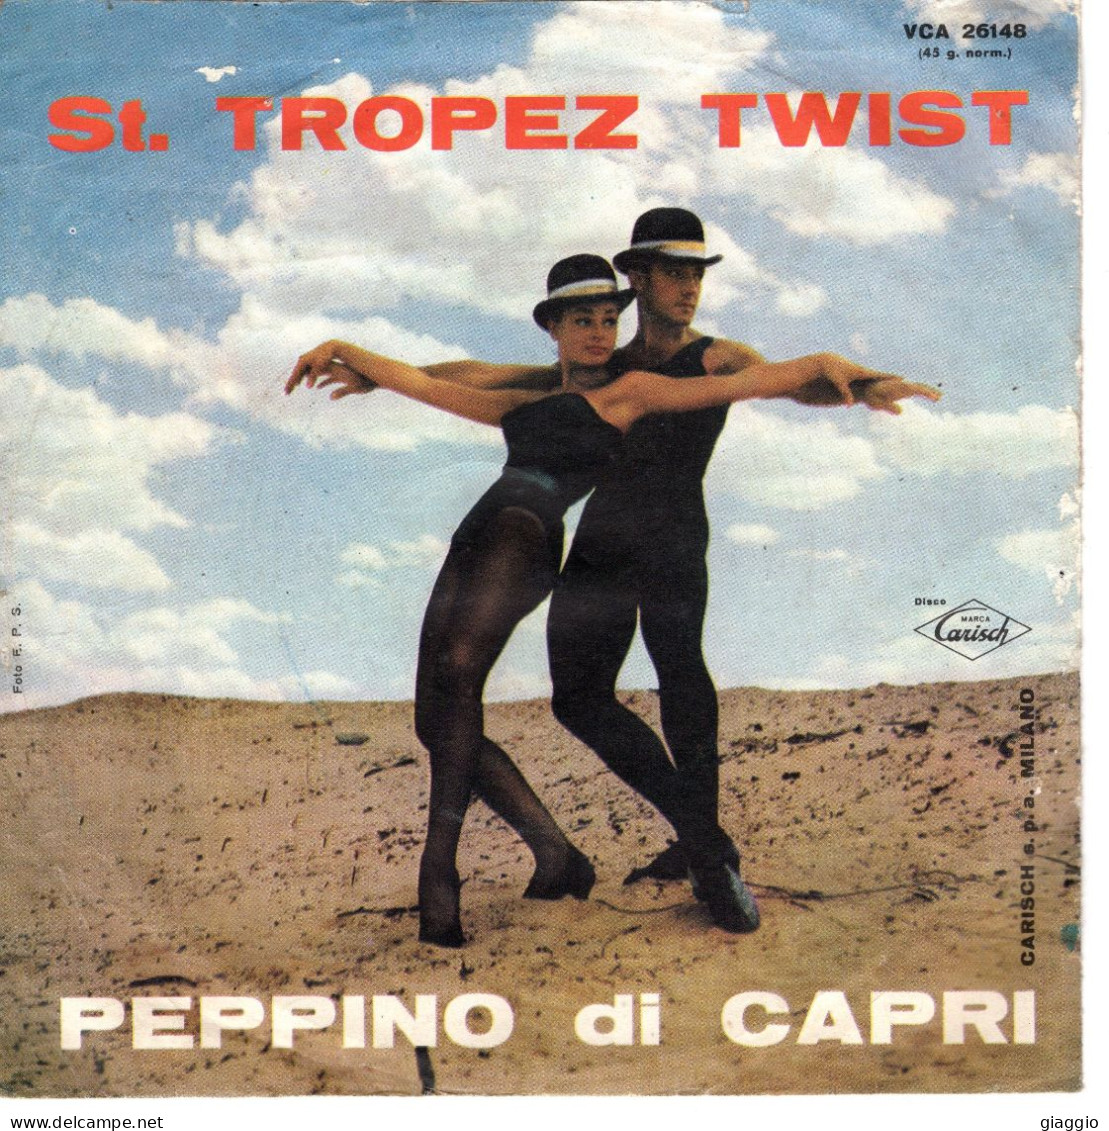 °°° 520) 45 GIRI - PEPPINO DI CAPRI - DANIELA / ST. TROPEZ TWIST °°° - Other - Italian Music